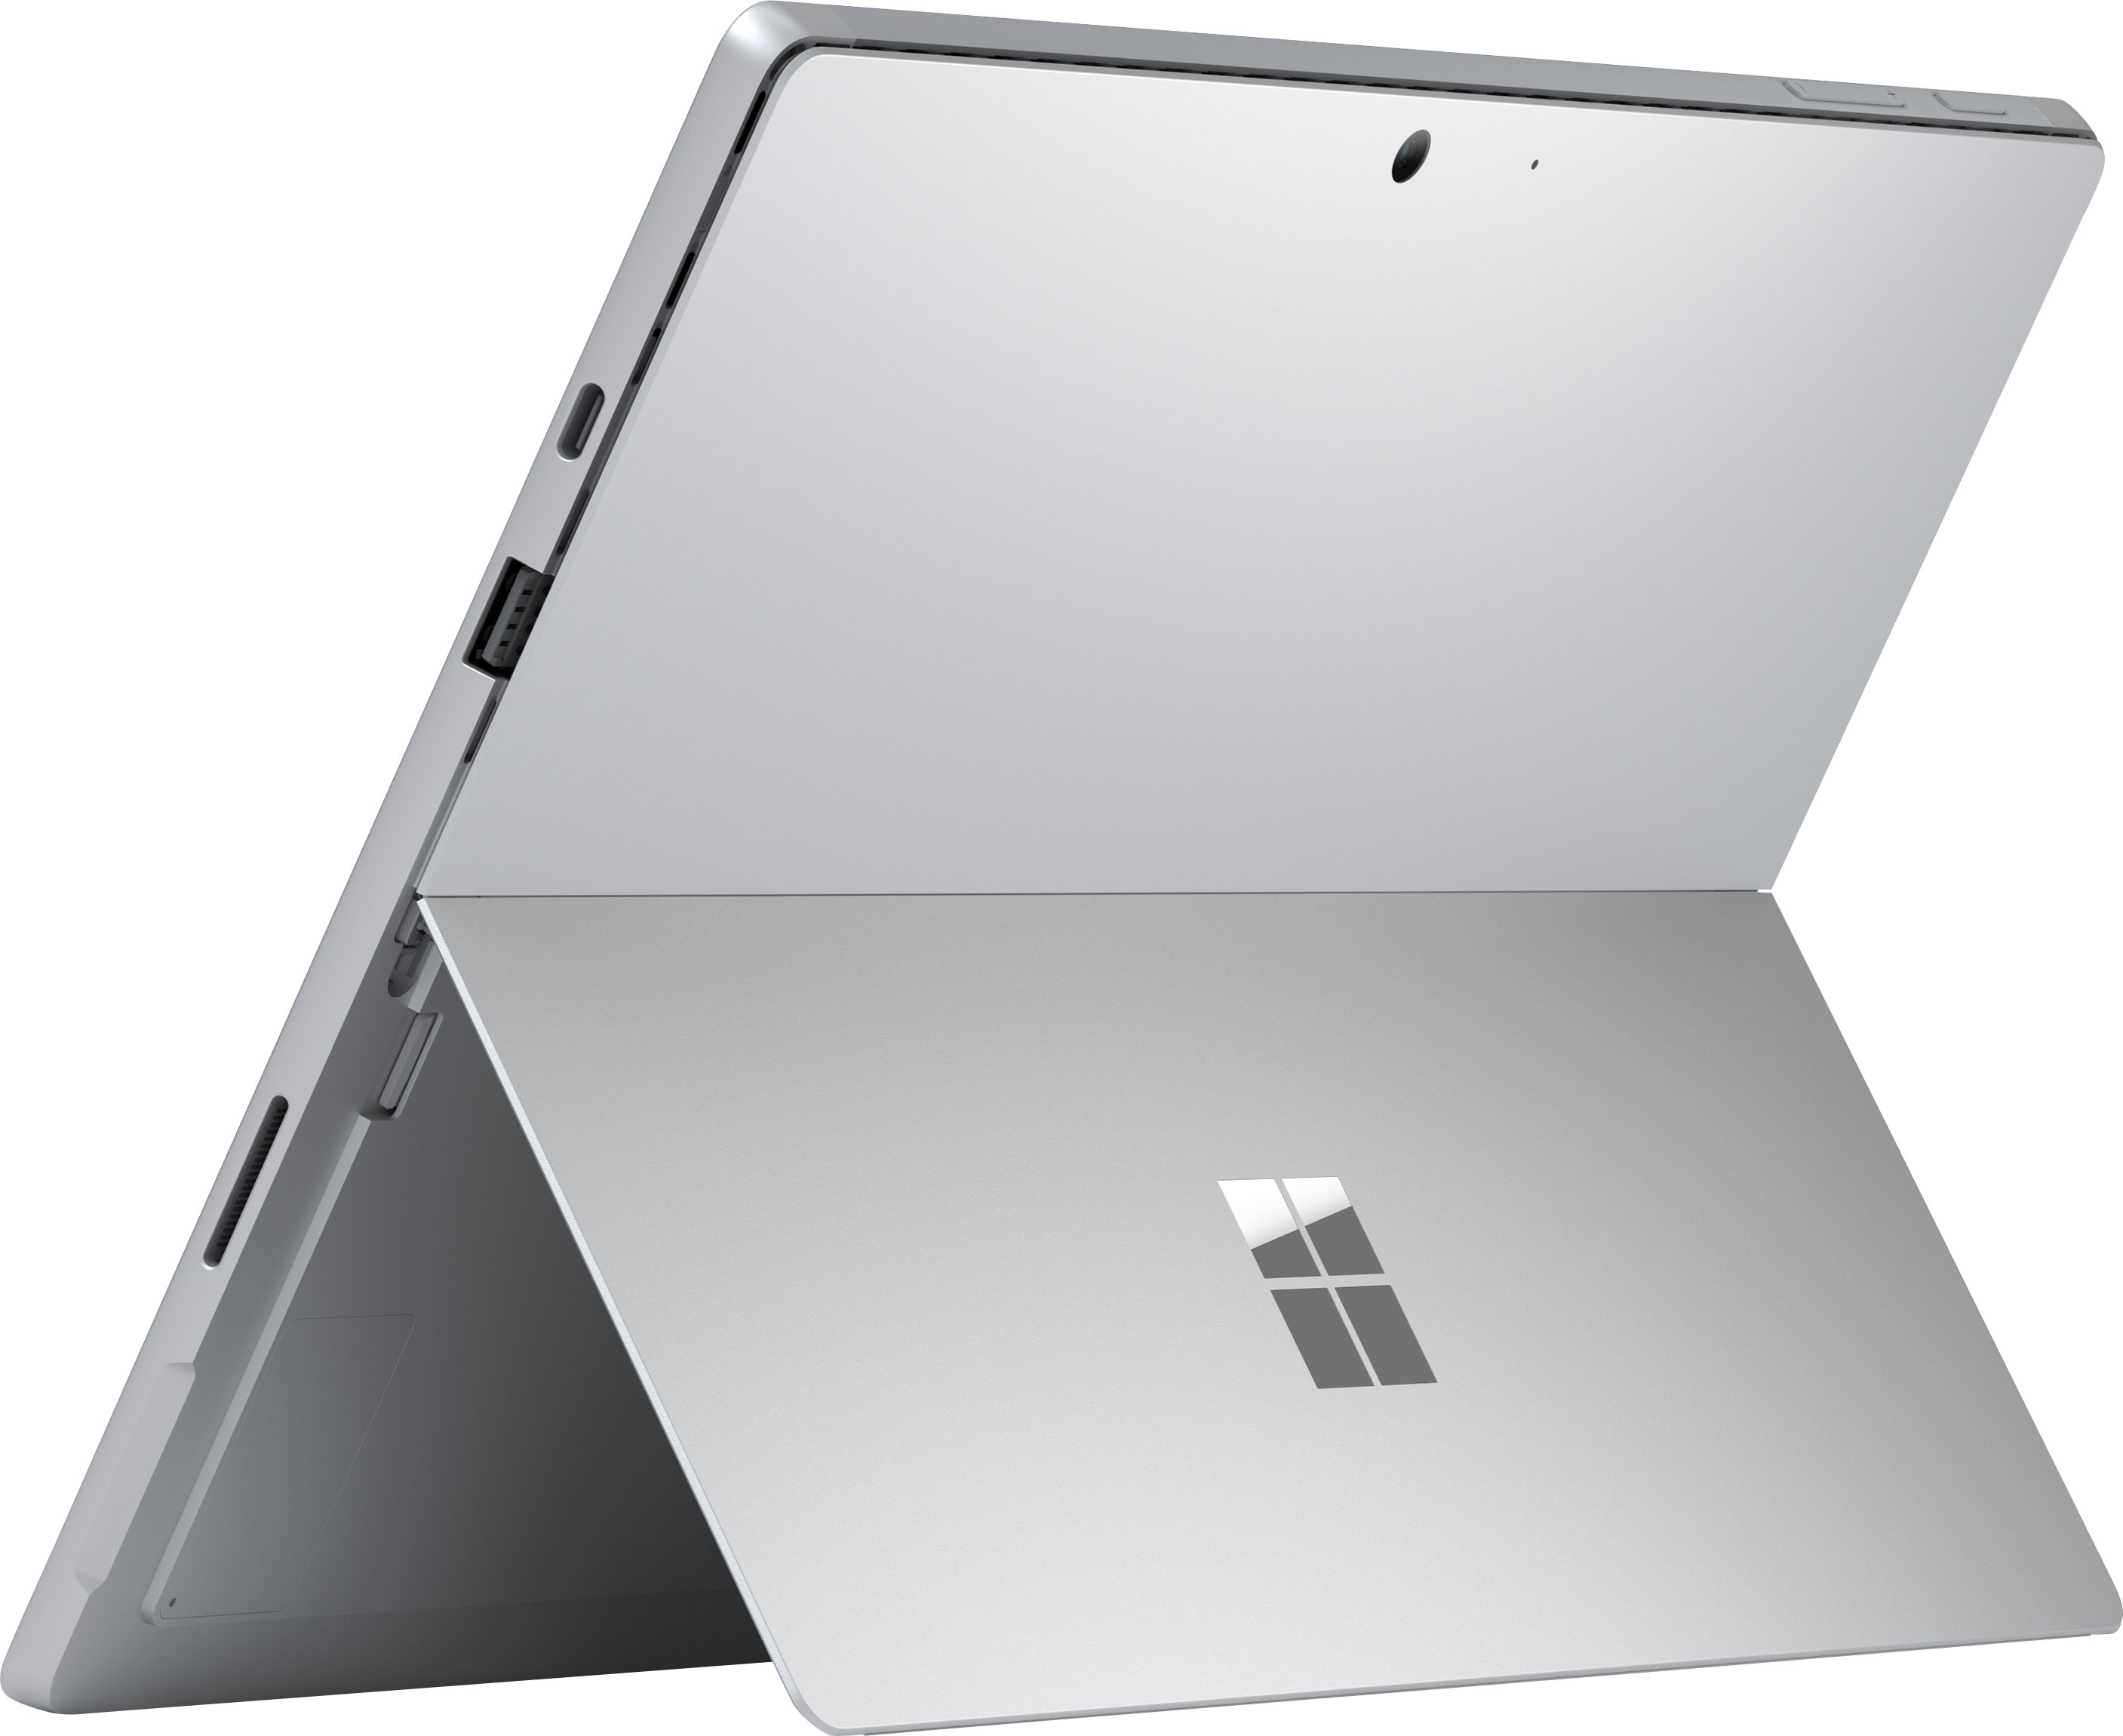 Surface Pro 7 Core i5-1035G4, RAM 8GB, SSD 128GB 12.3in QHD, Window 10 - 2